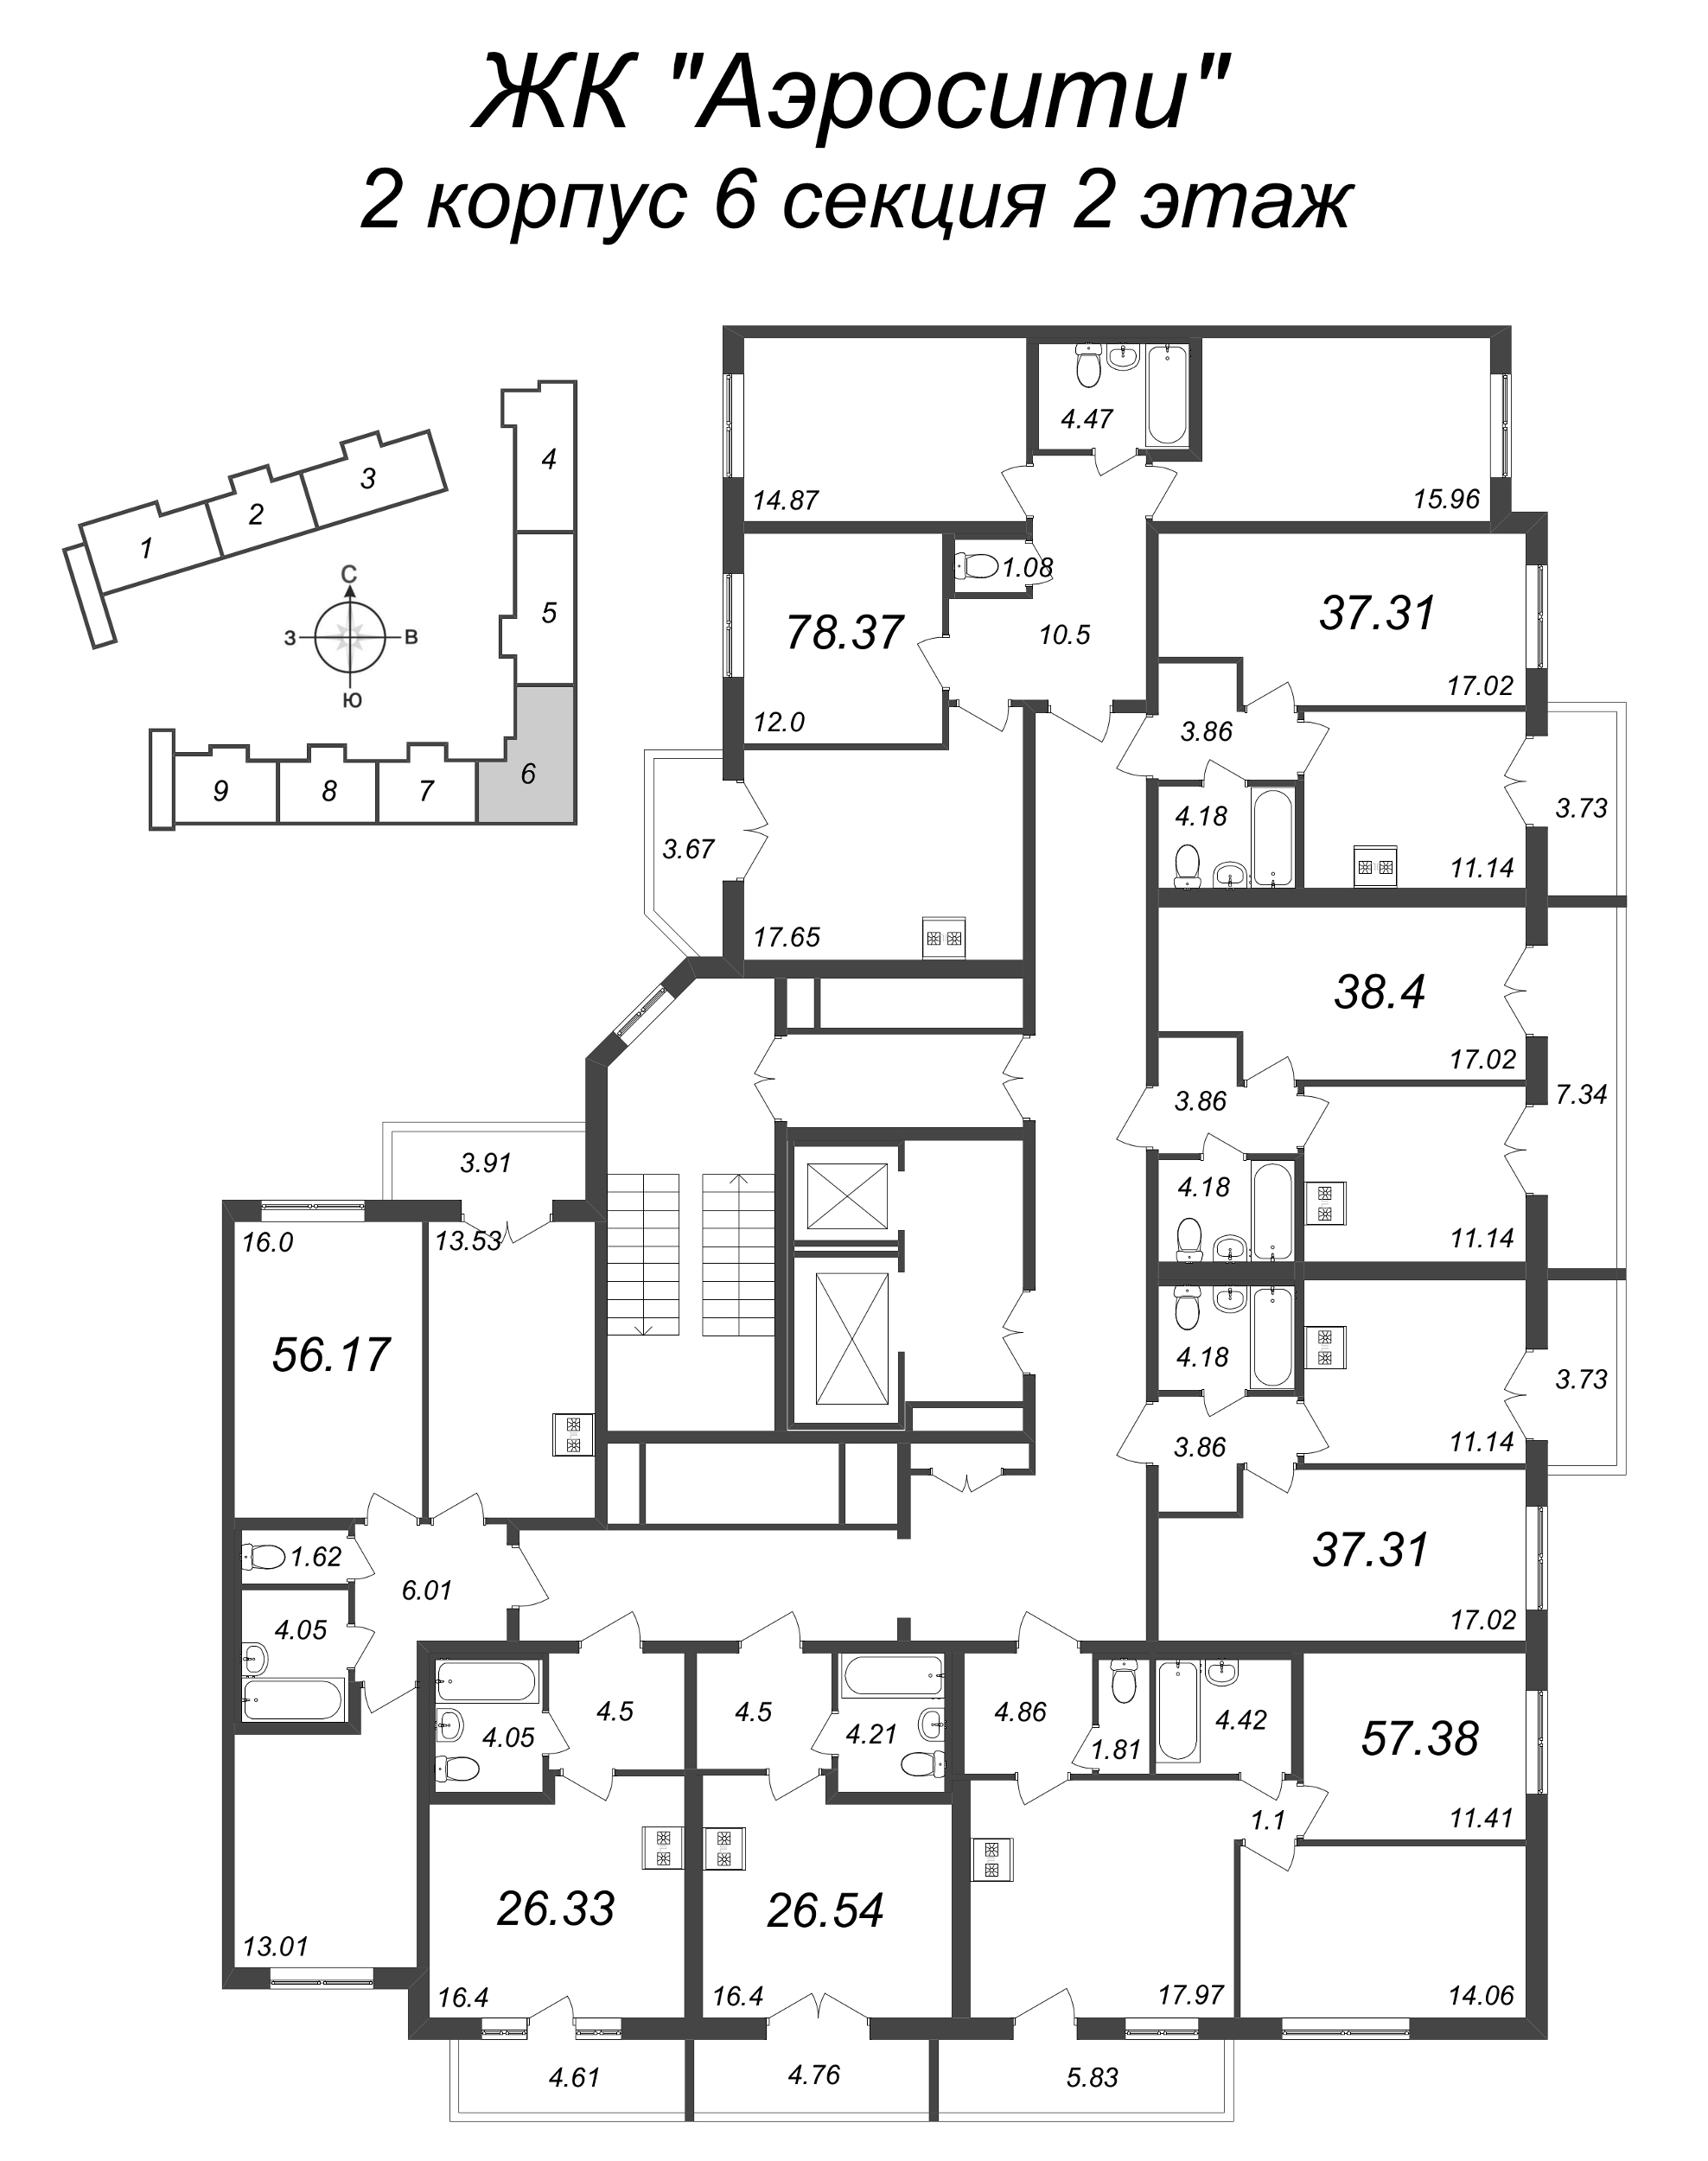 4-комнатная (Евро) квартира, 78.37 м² - планировка этажа